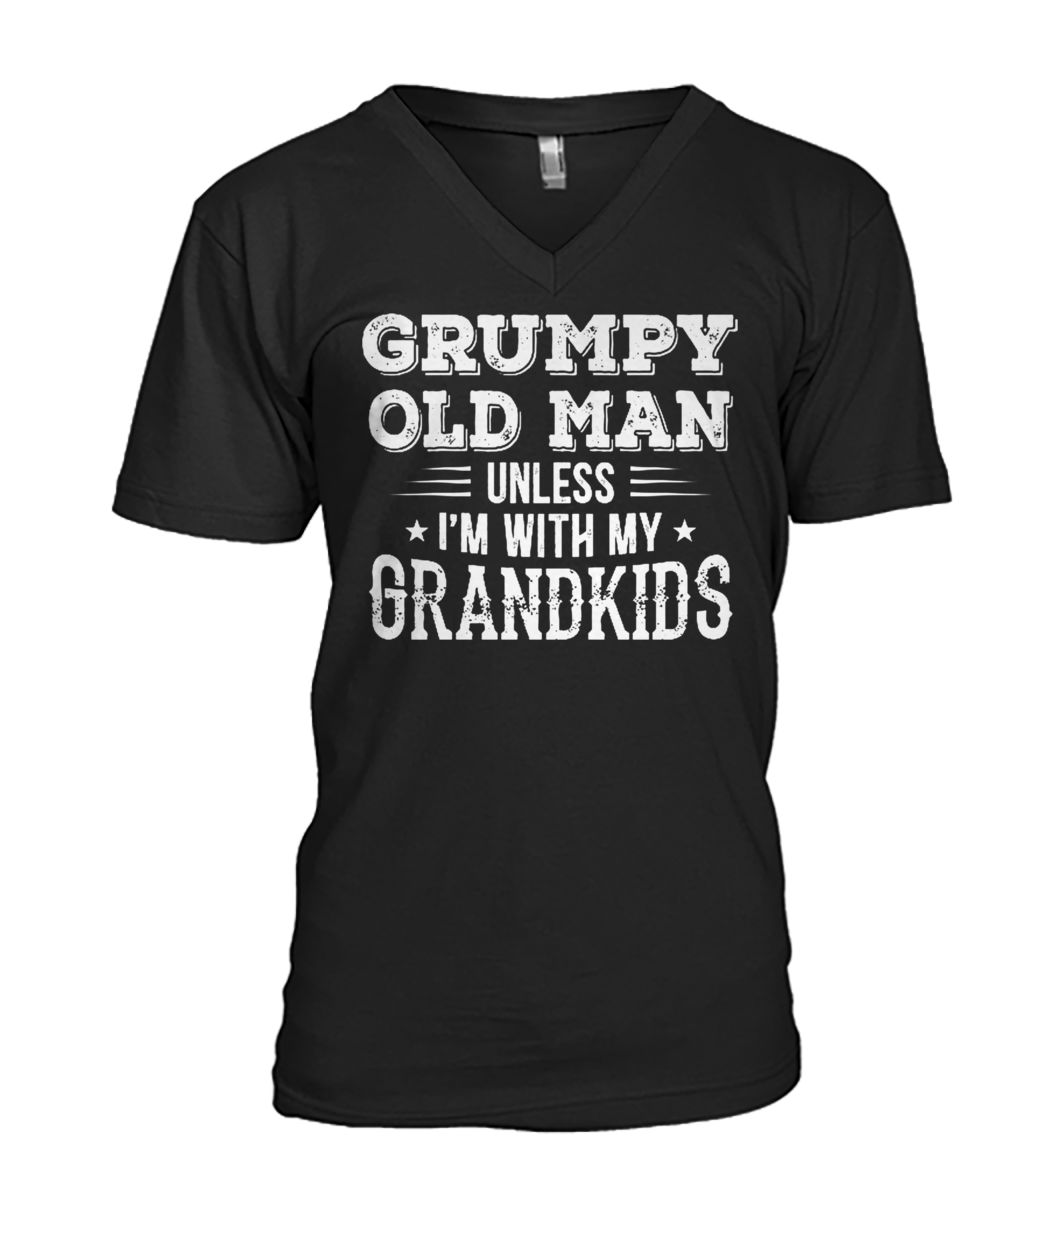 Grumpy old man unless I'm with my grandkids mens v-neck